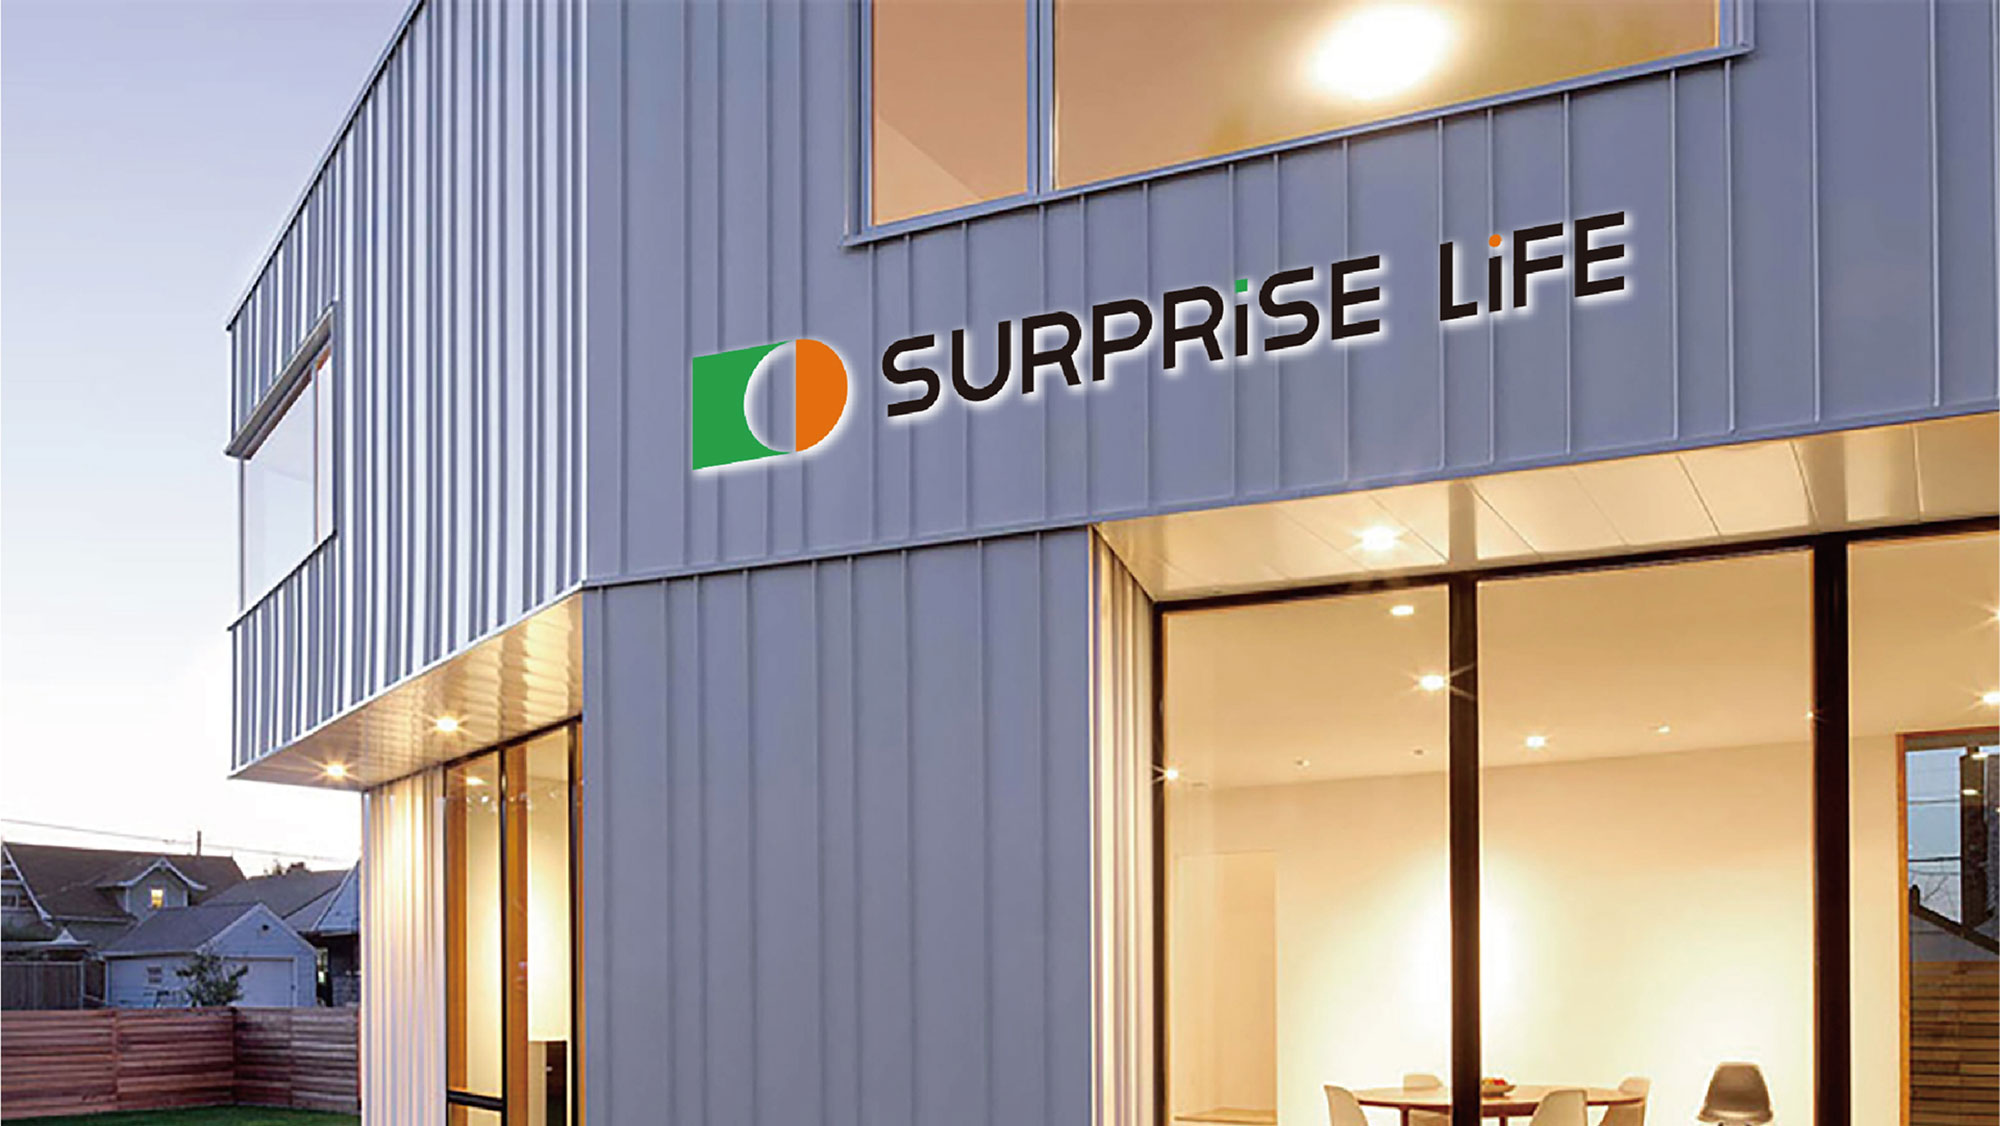 Surprise-Life11.jpg